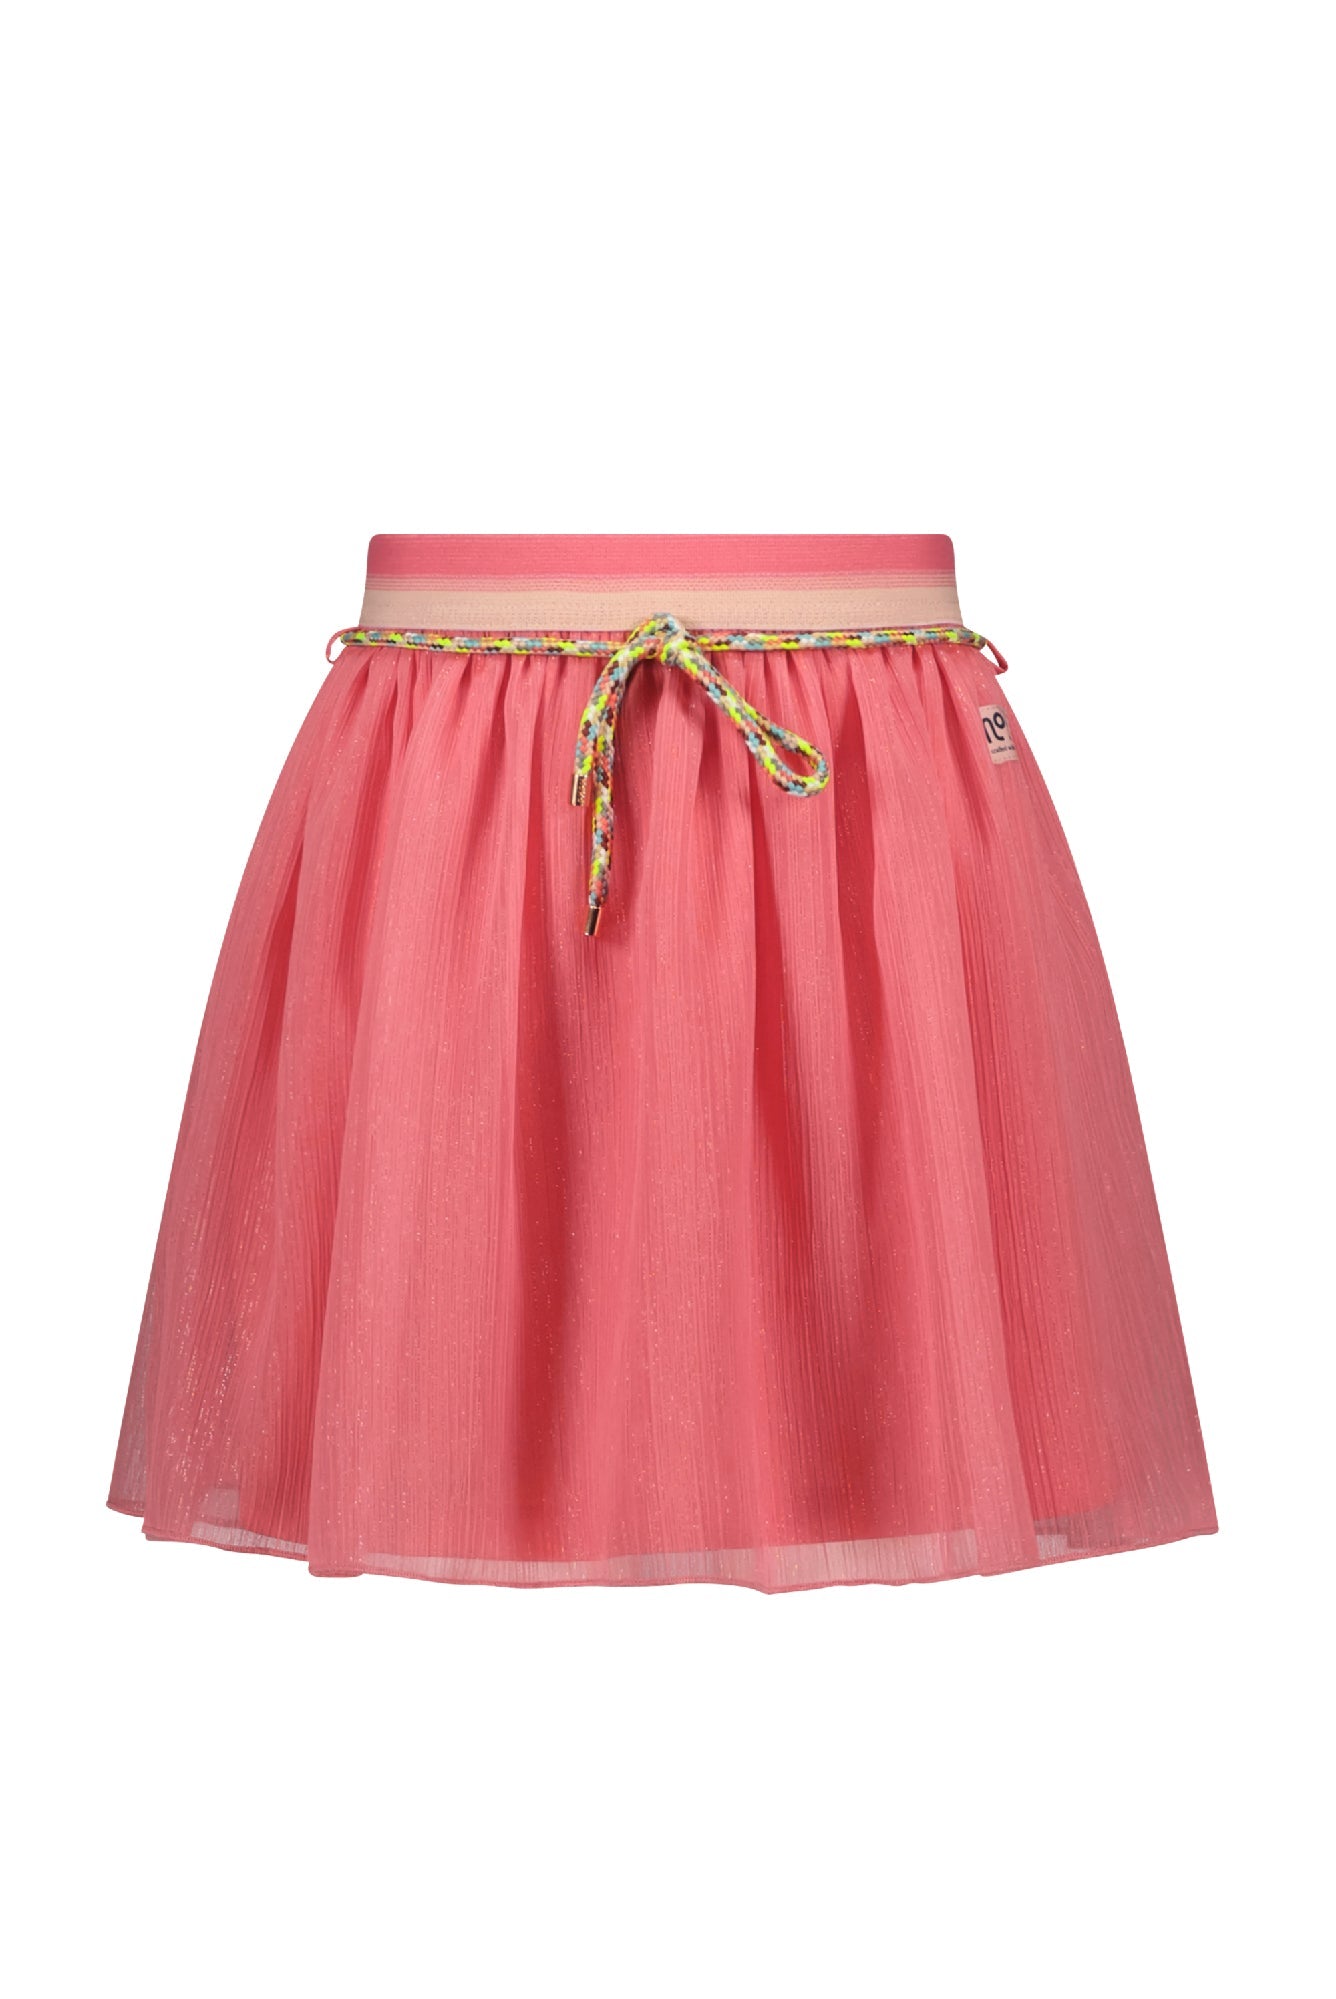 Meisjes Noba solid skirt with colored cord van NoNo in de kleur Peach Blossom in maat 134-140.